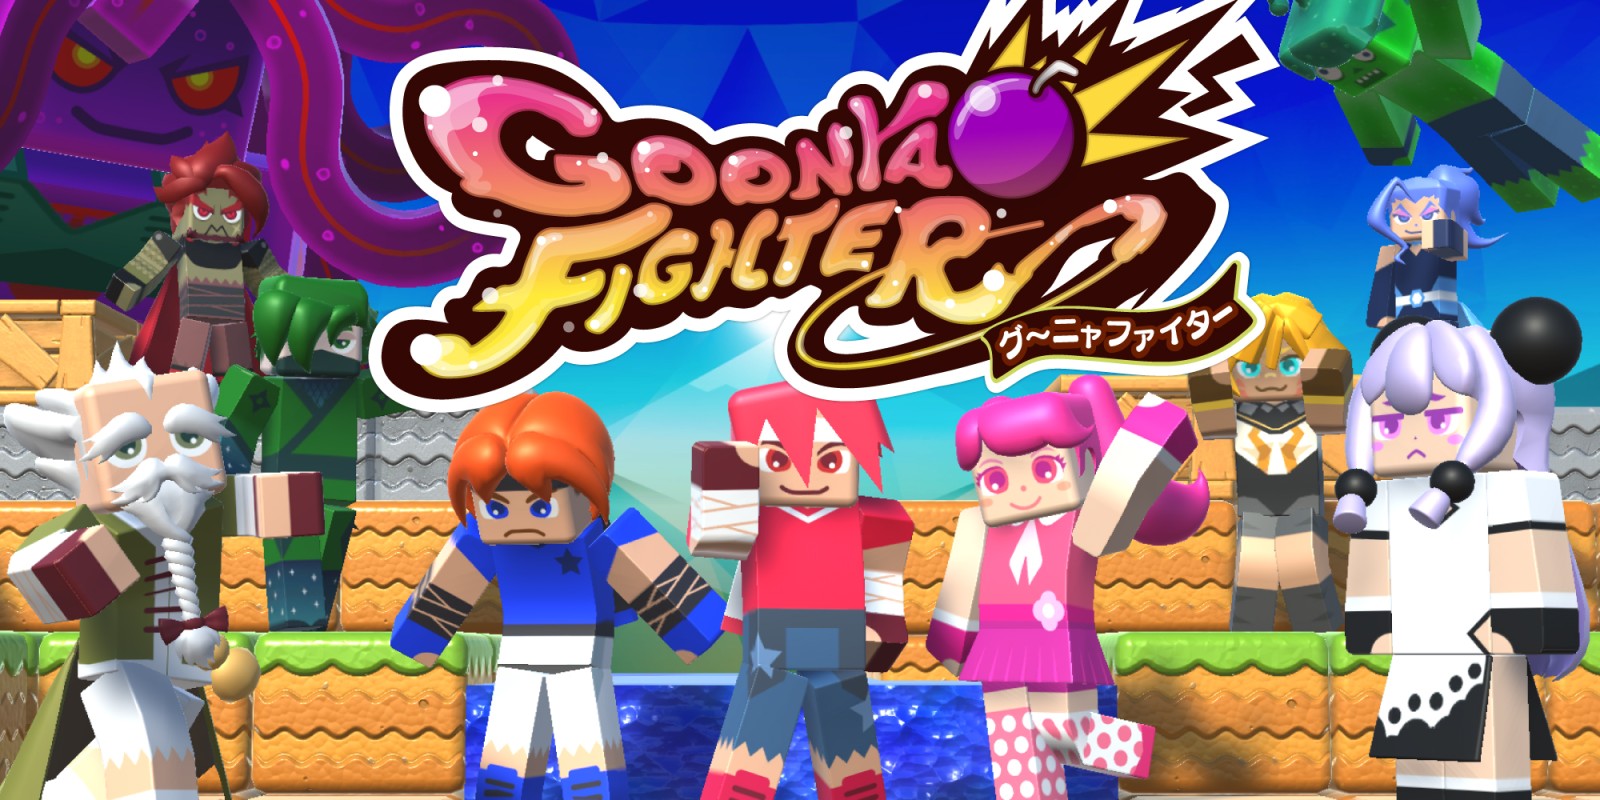 Goonya Fighter